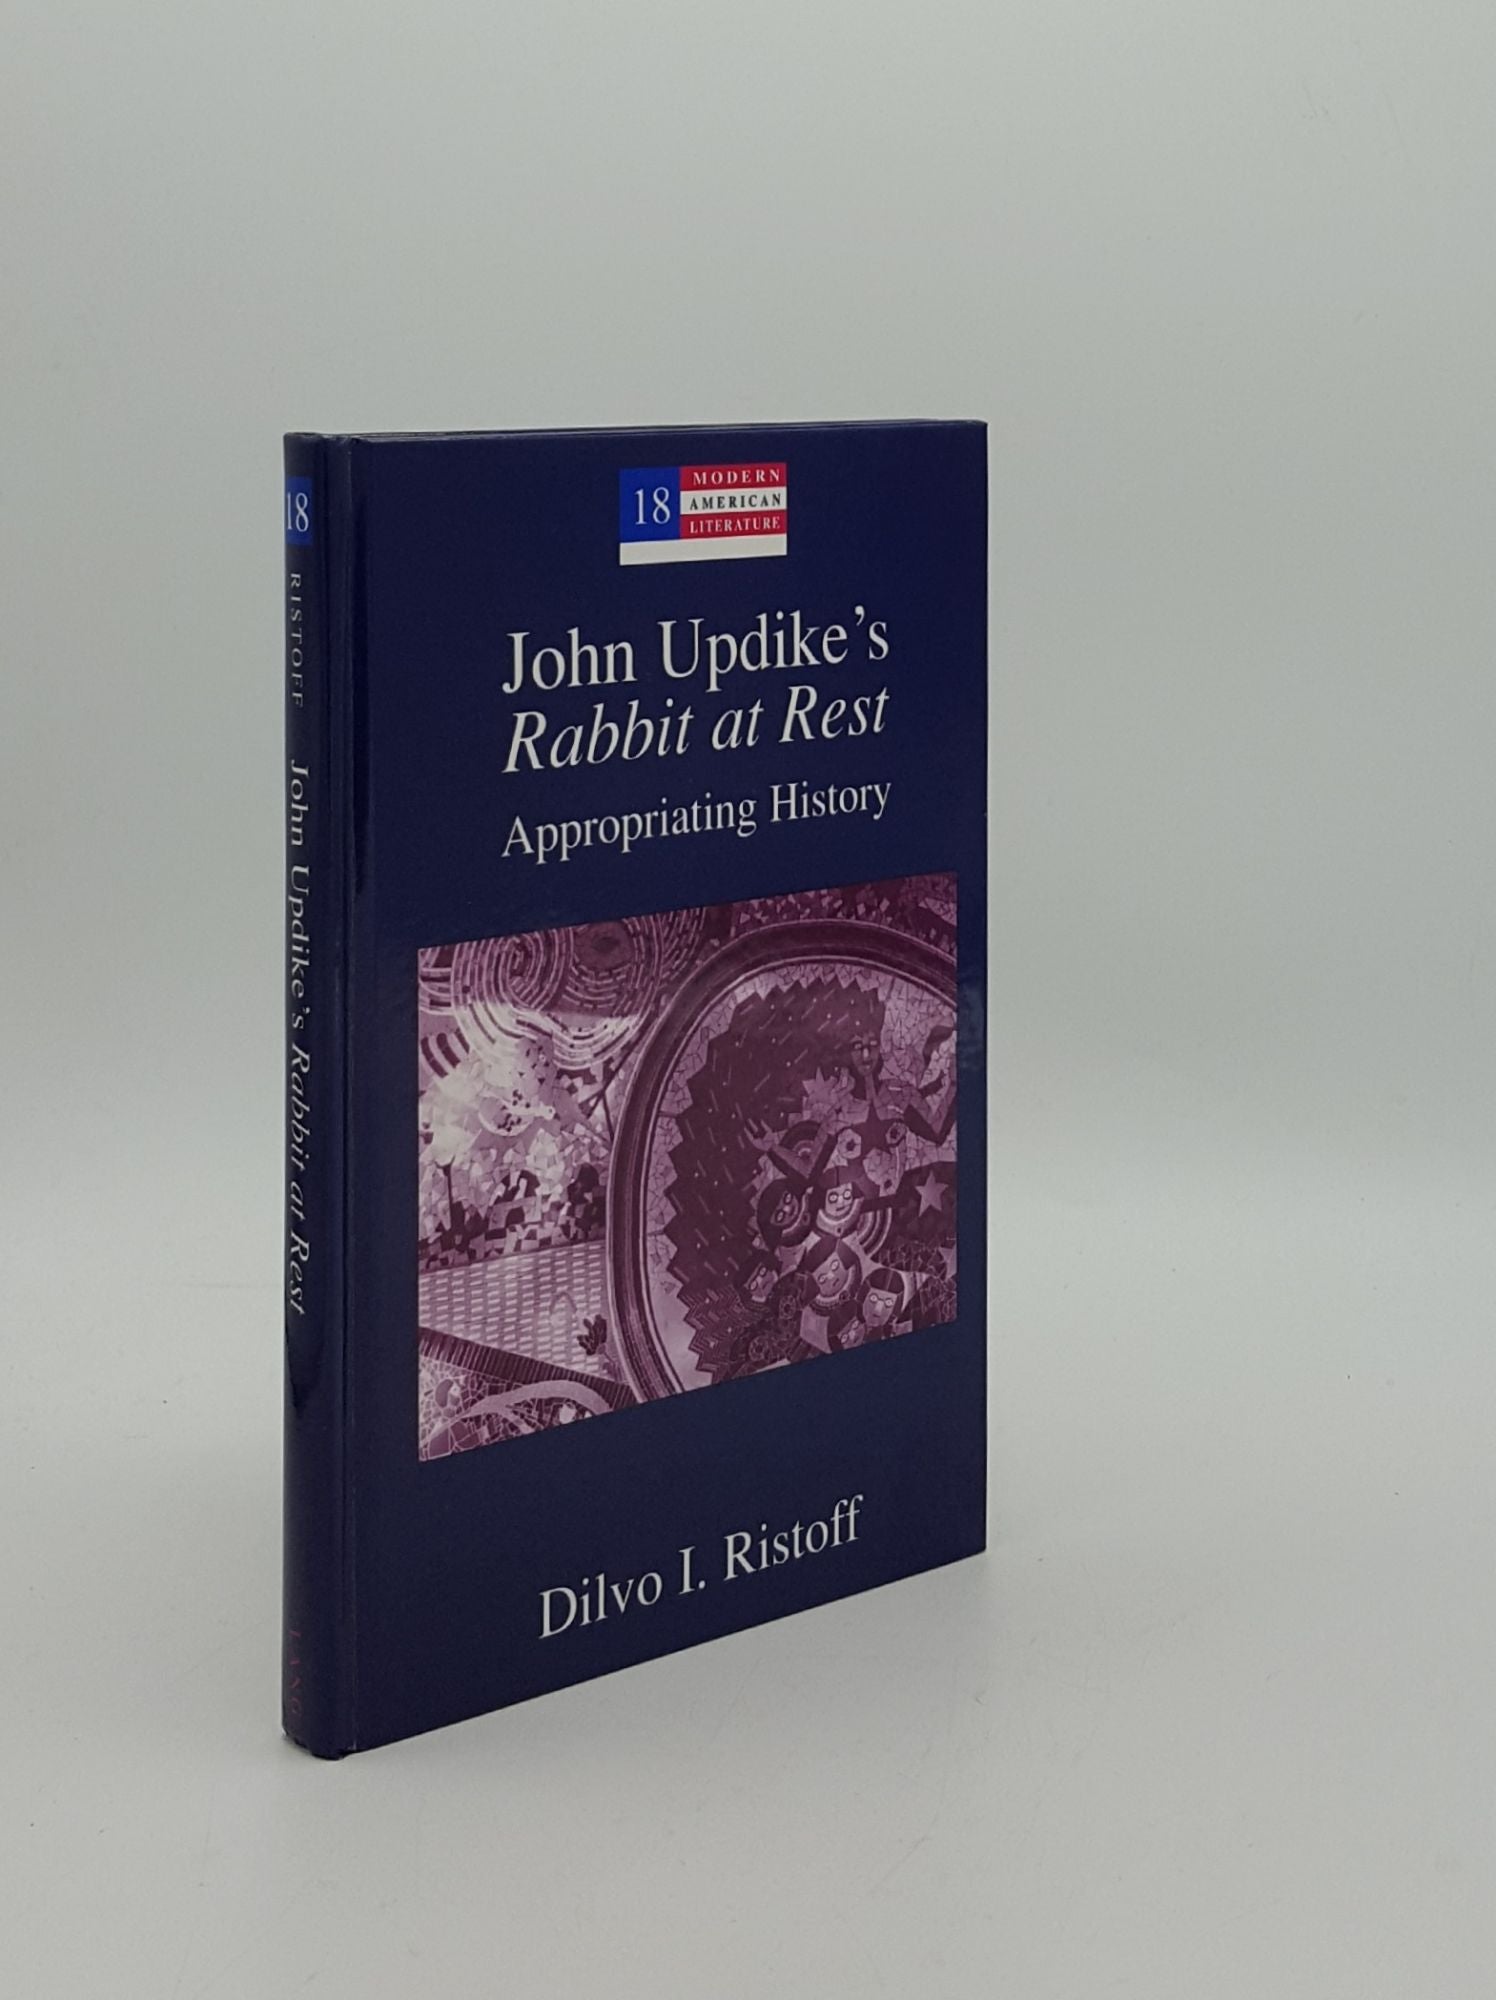 RISTOFF Dilvo I. - John Updike's Rabbit at Rest Appropriating History